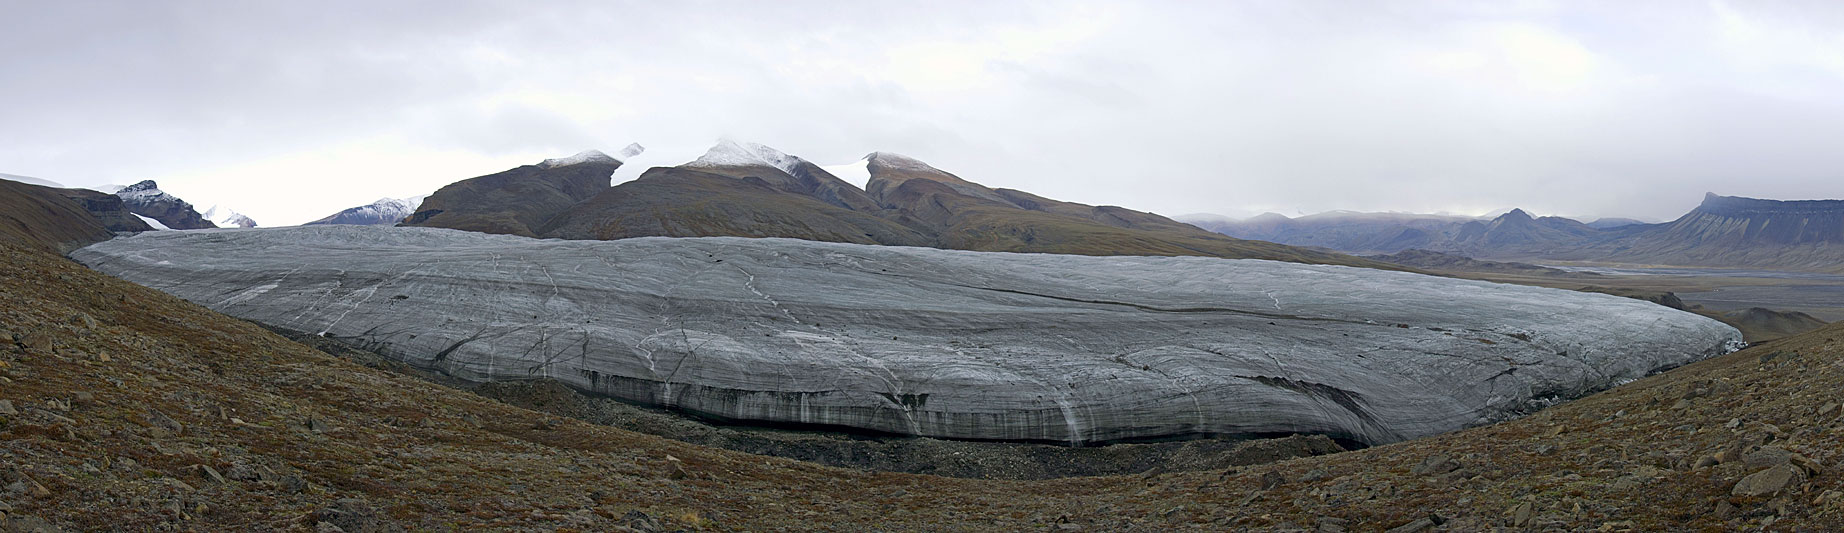 Crusoe Glacier Panoramabilder